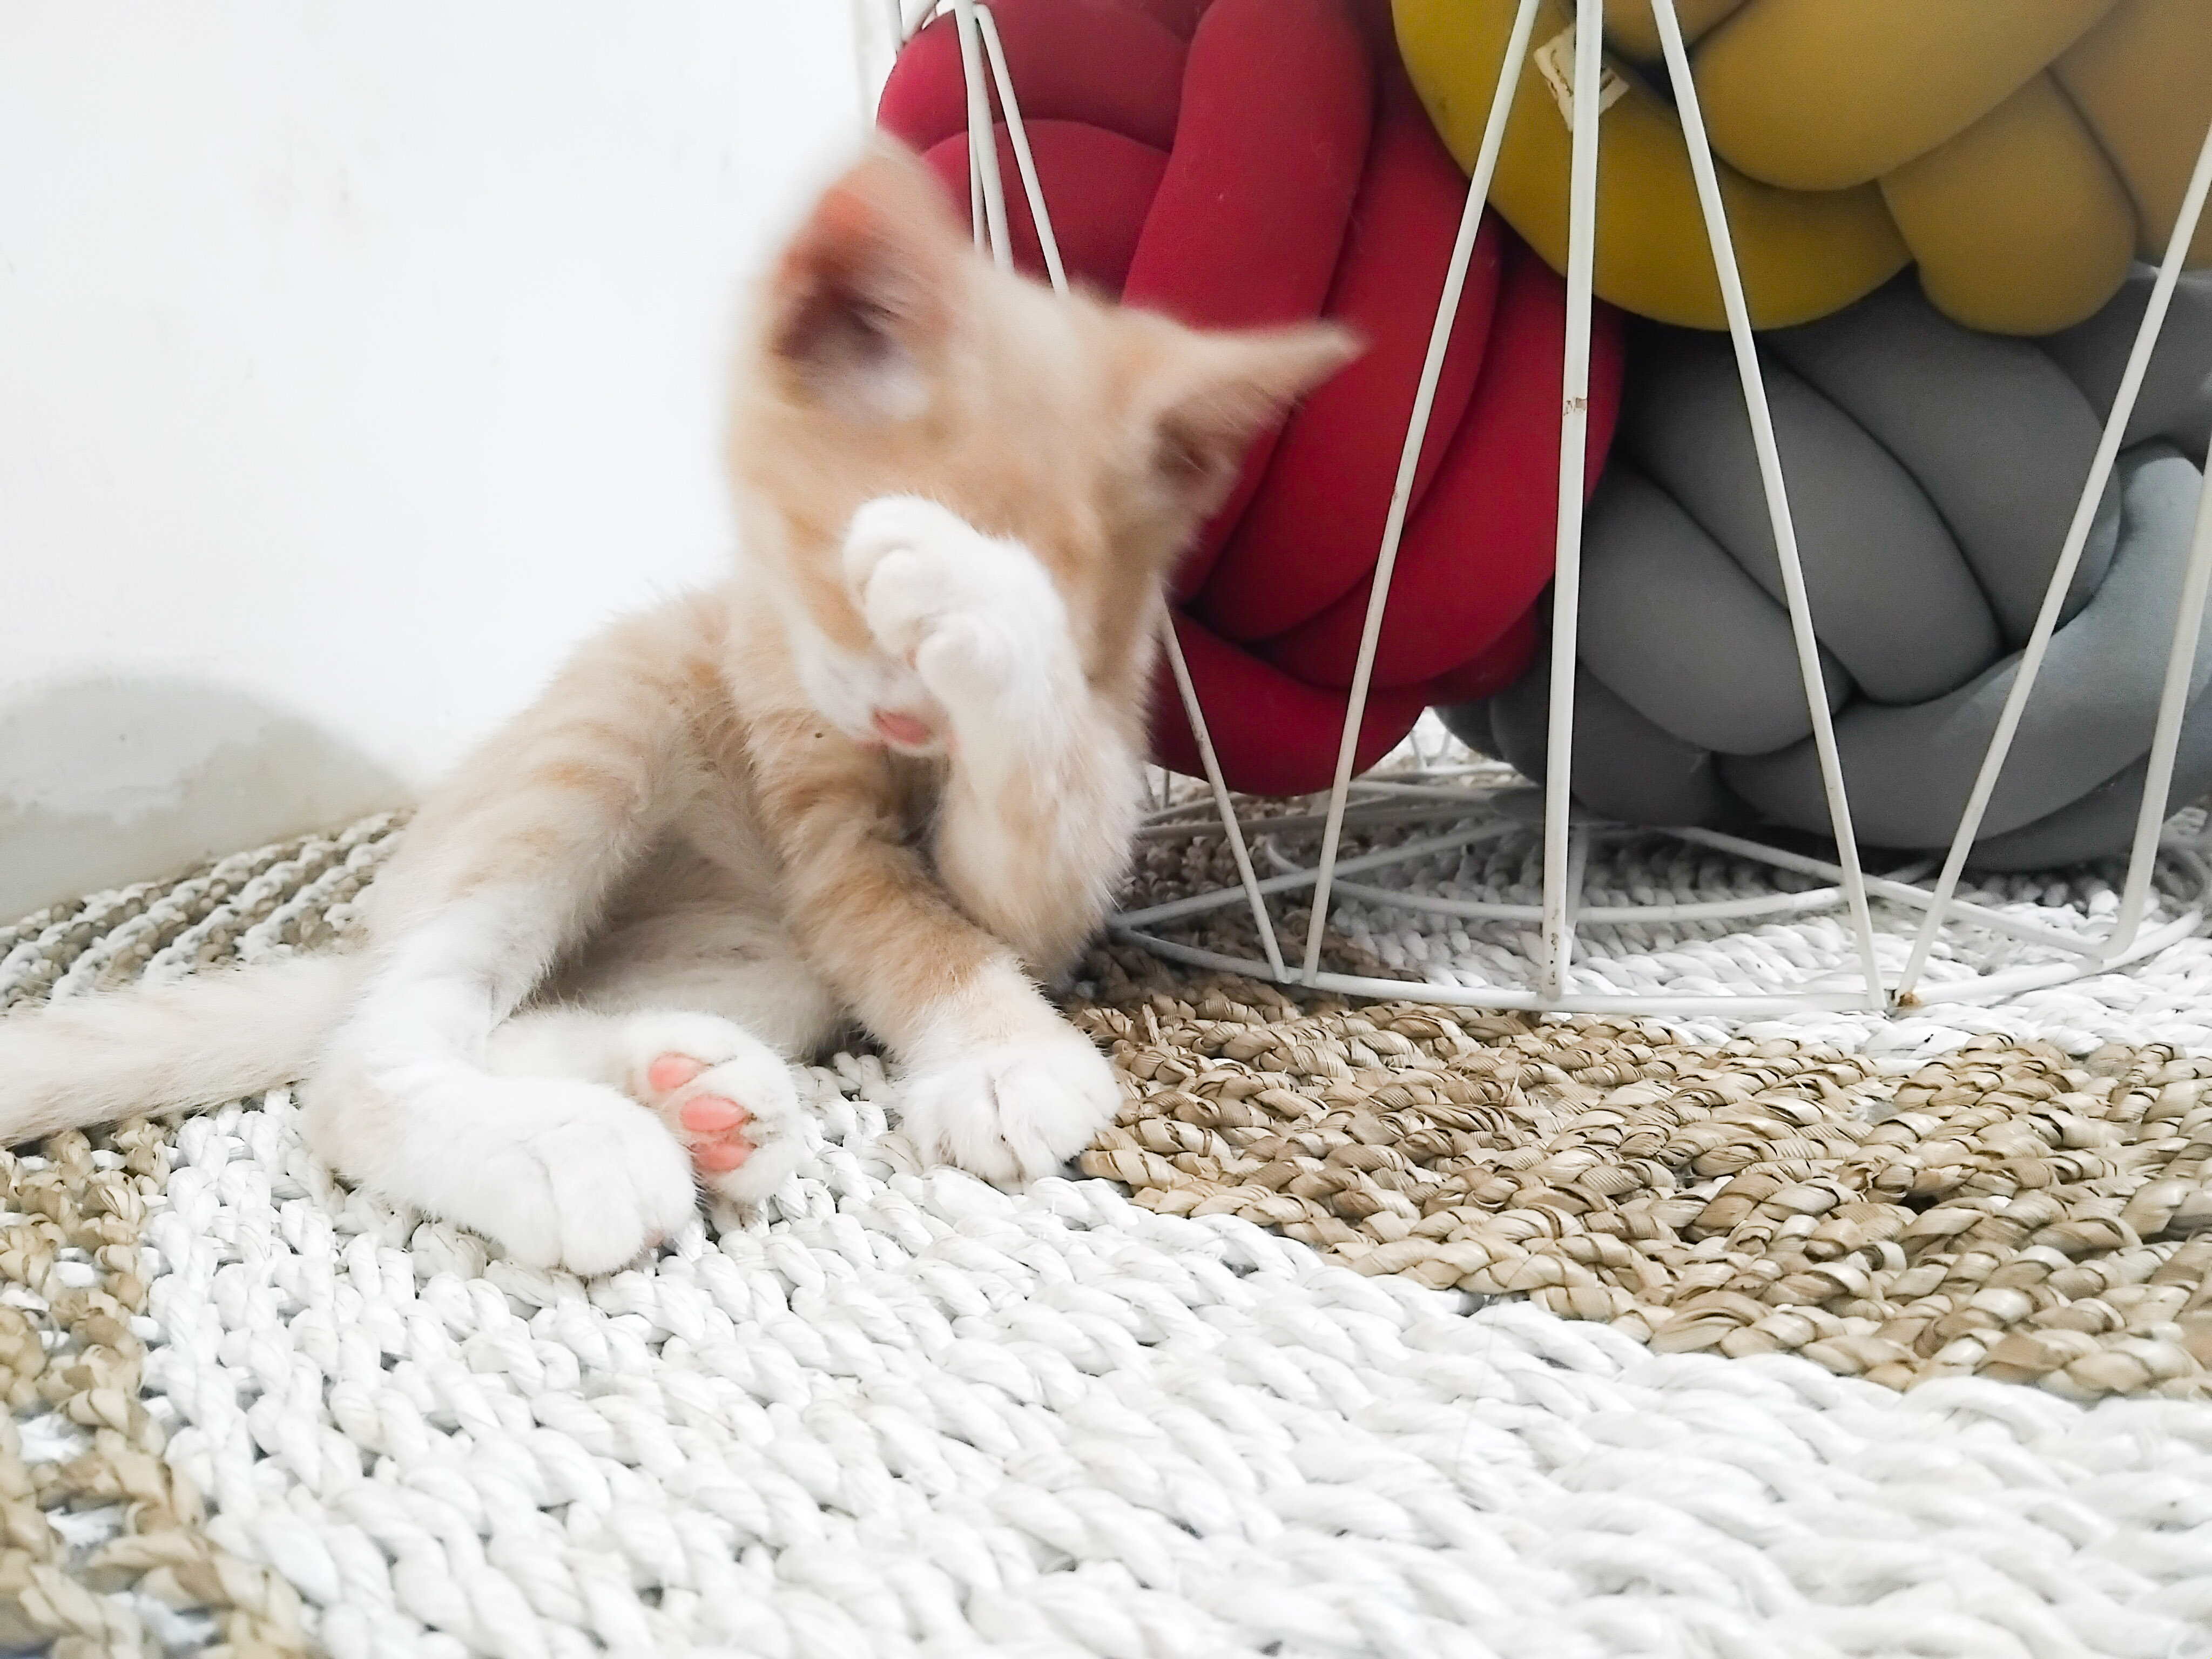 Gejala, Pengobatan dan Cara Mencegah Masalah Tungau Telinga pada Kucing, Pemilik Perlu Simak!